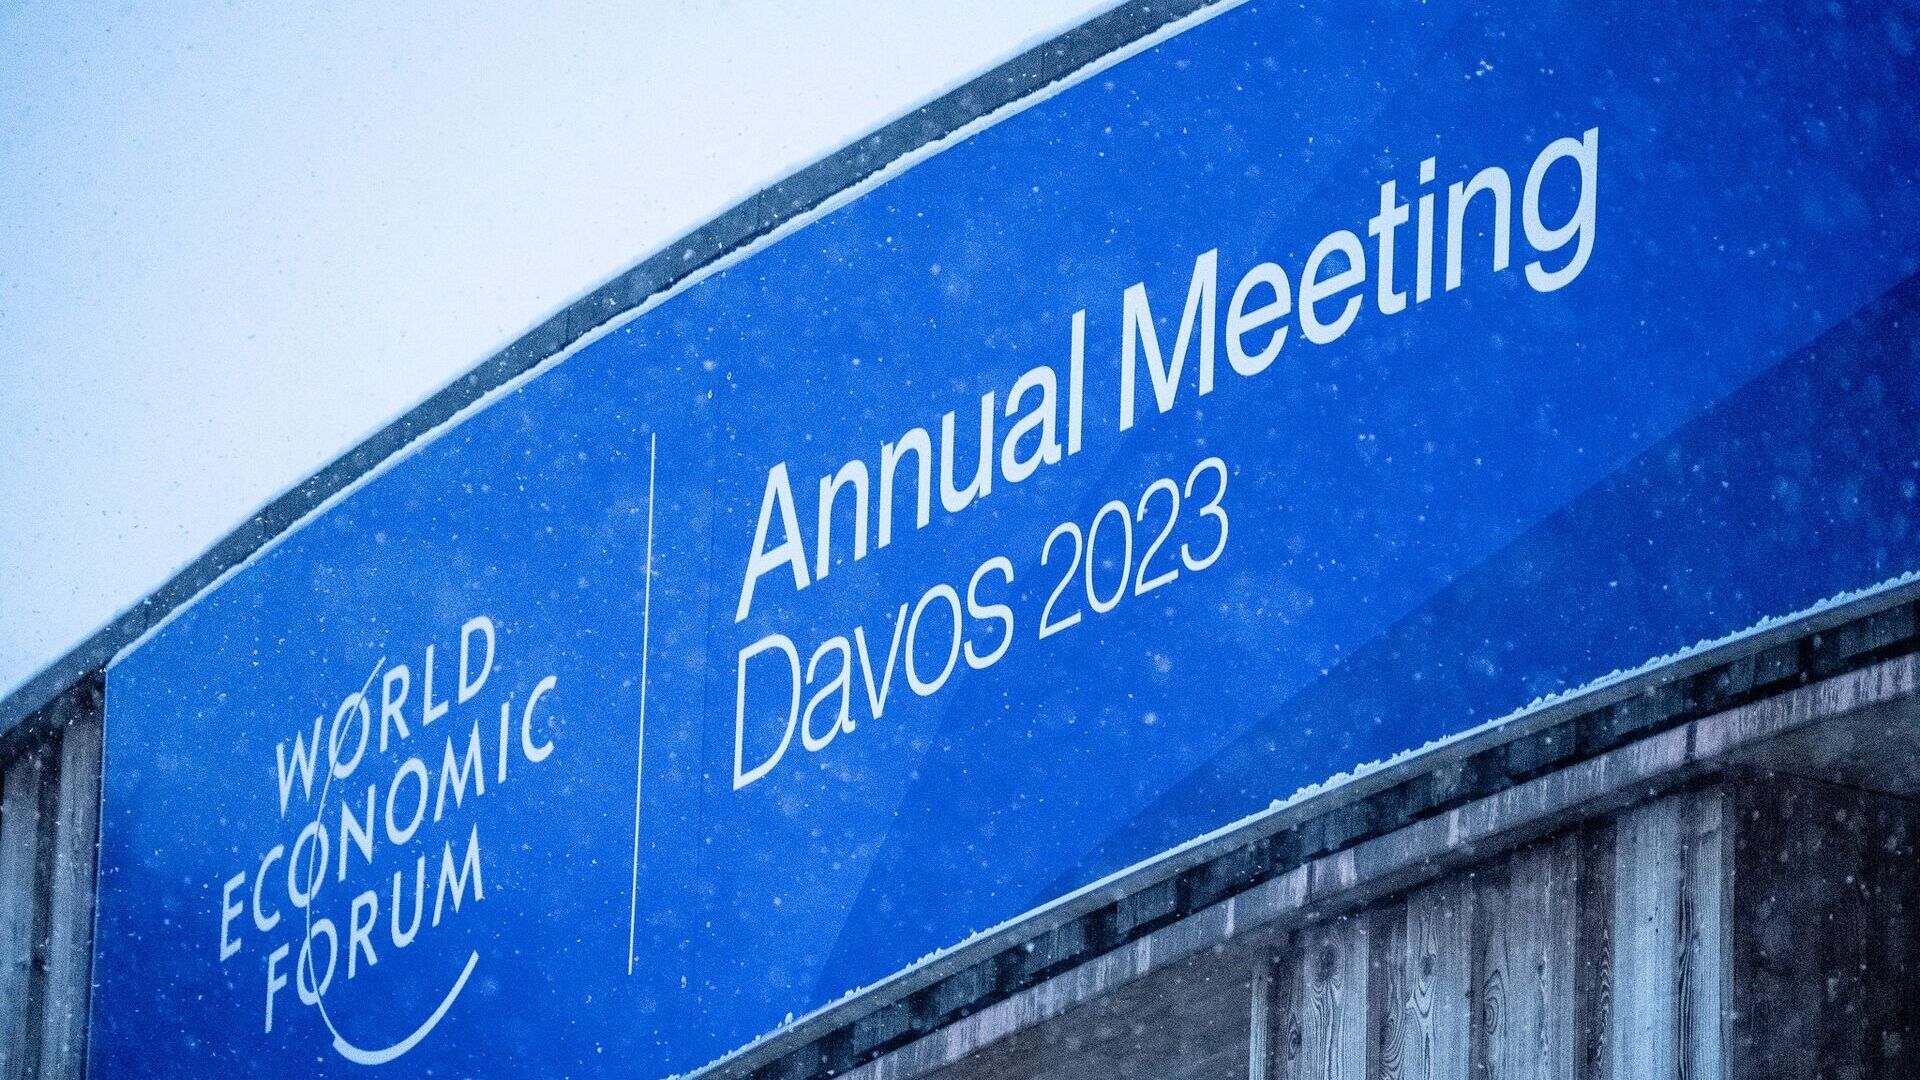 WEF 2023: هزار و نهصد رهبر اقتصادی، دولتی و دولتی جهان برای شرکت در مجمع جهانی اقتصاد 2023 در داووس انتخاب شده اند.